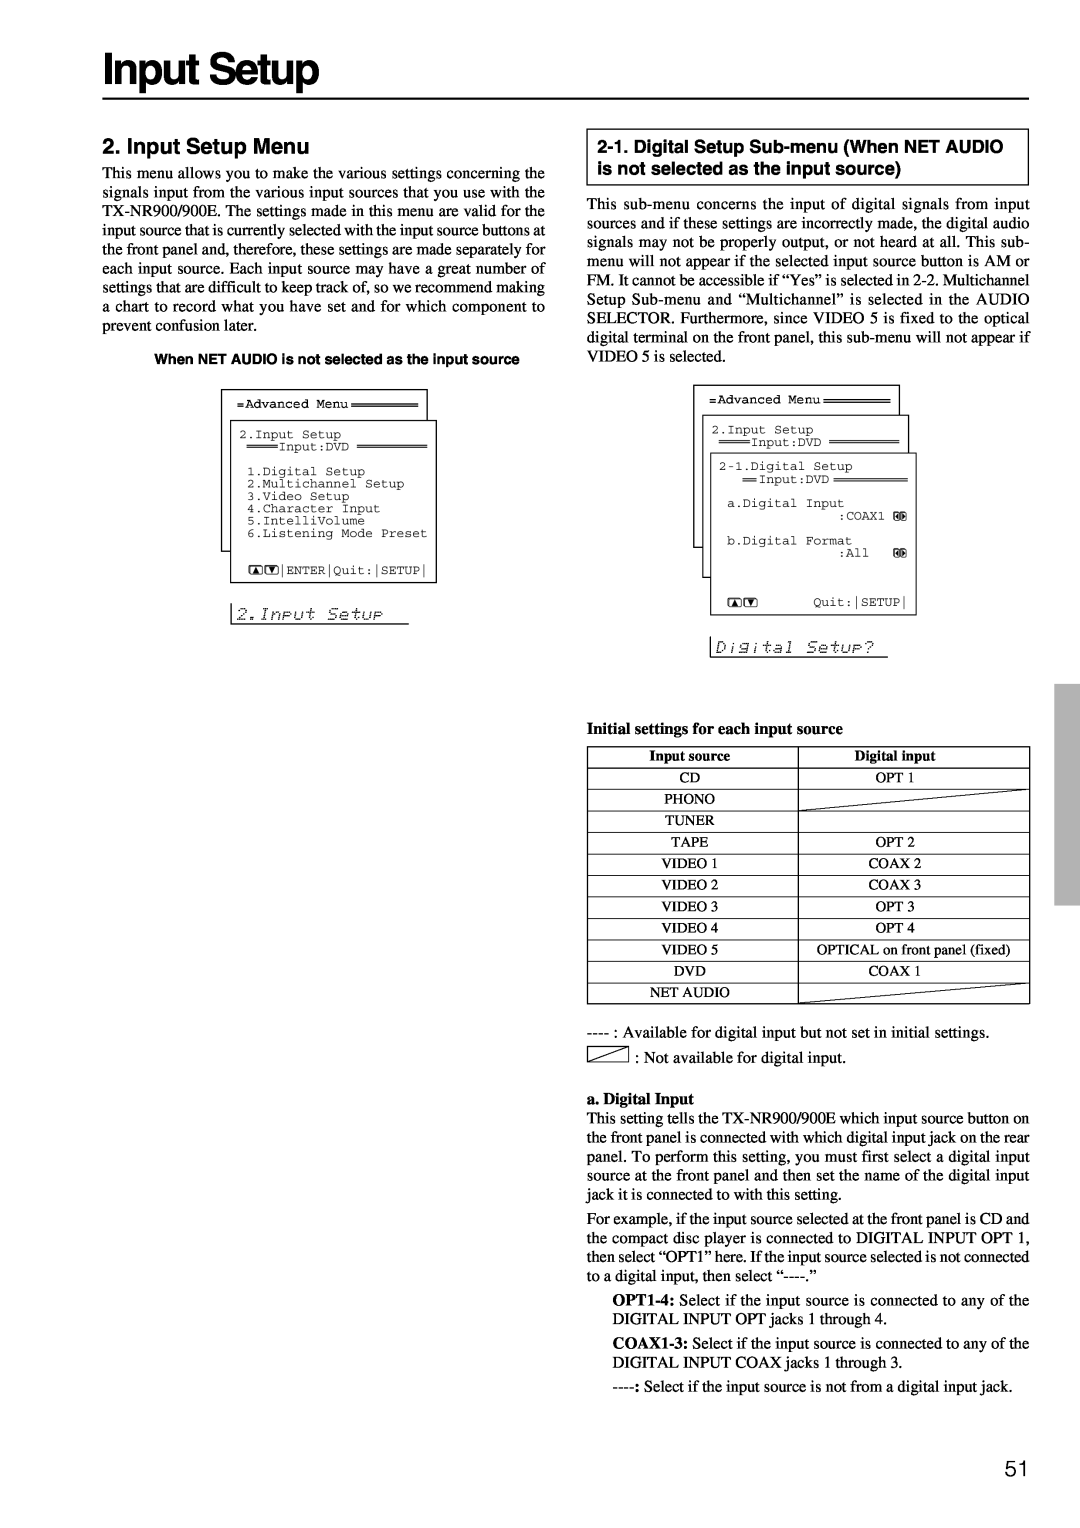 Onkyo TX-NR900E instruction manual Input Setup Menu 